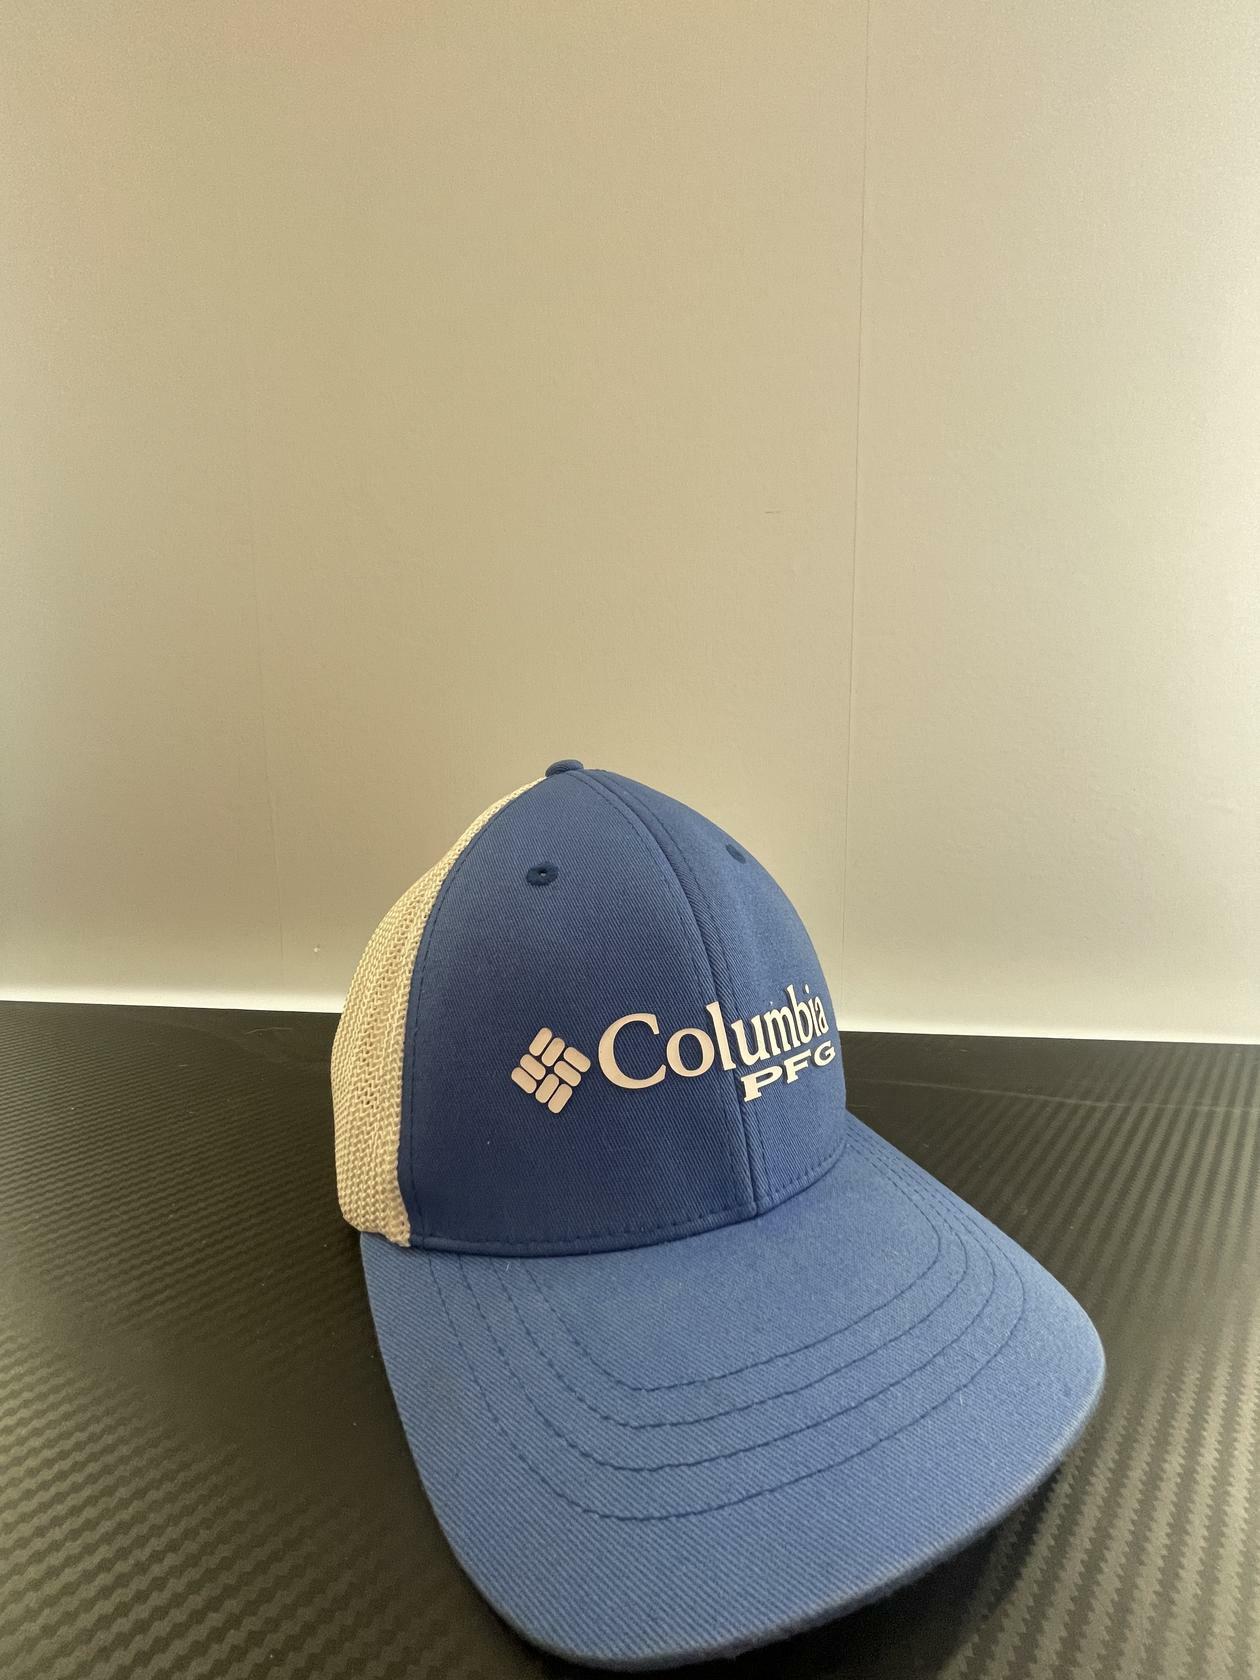 Men's Adult S/M Columbia PFG Hat - Very Good